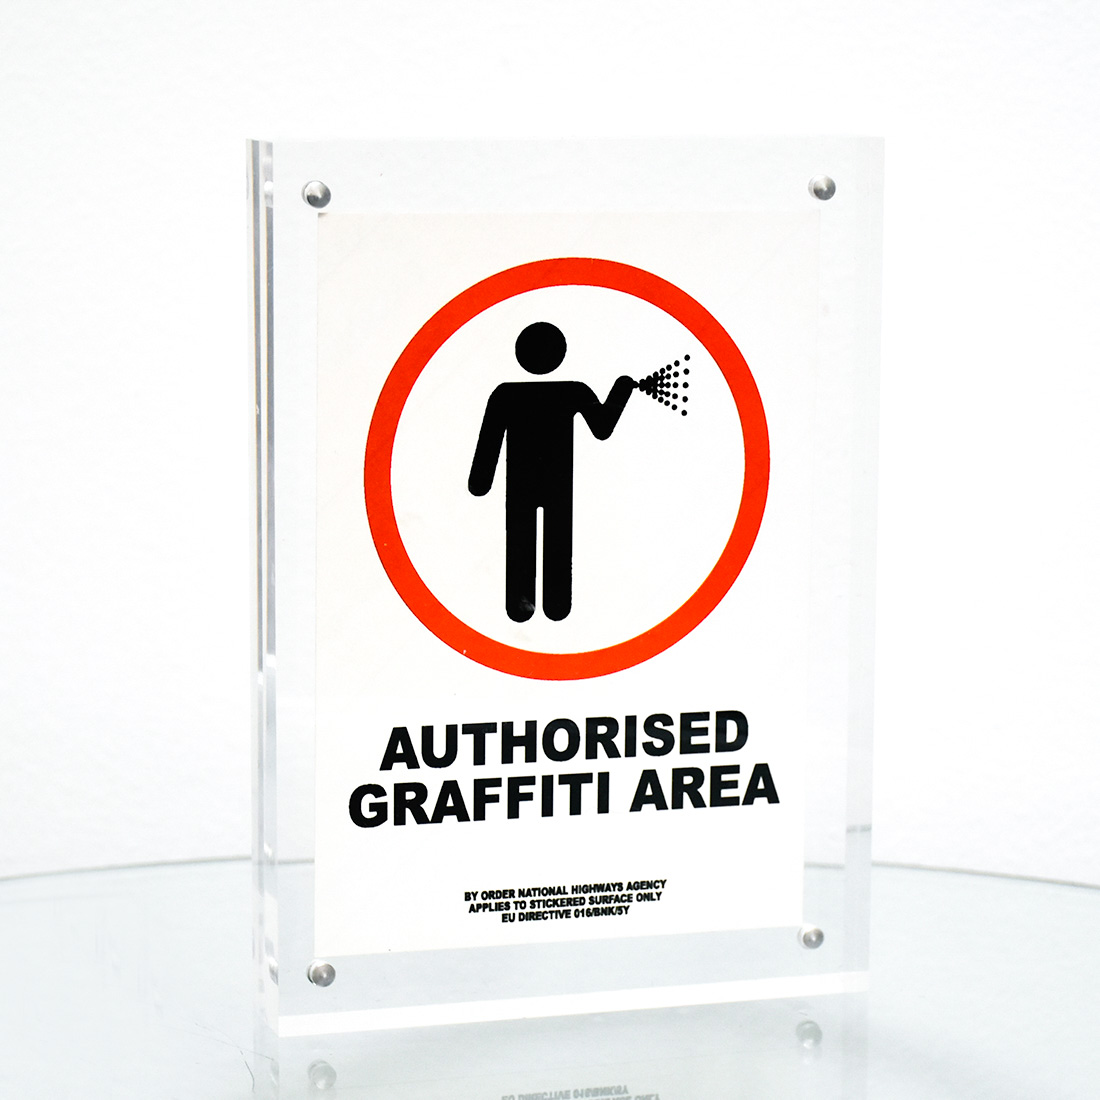 banksy authorised graffiti area sticker 016/bnk/5y